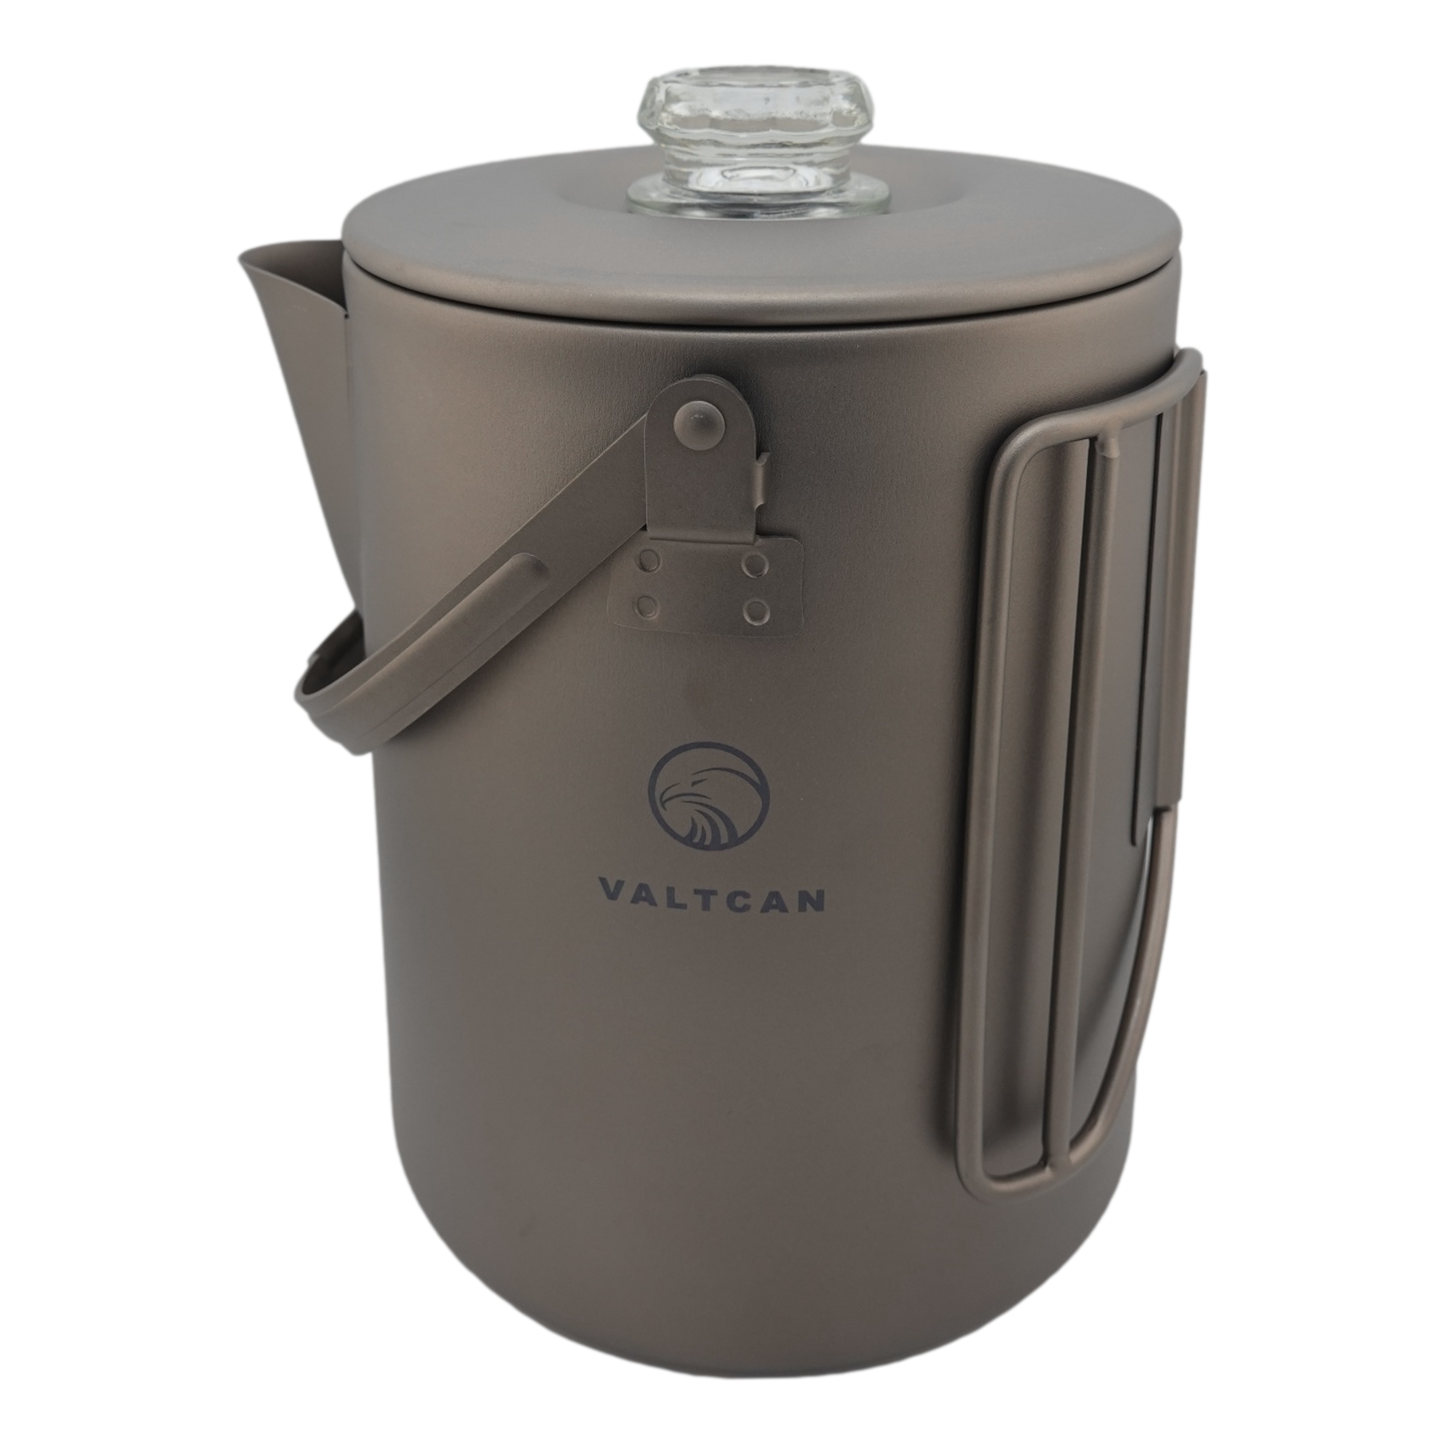 Valtcan Titanium Percolator Coffee Maker Pot 1.5L Filter Brew Ultralight Weight Kettle Camping Kettle 50.7 oz Capacity  395g